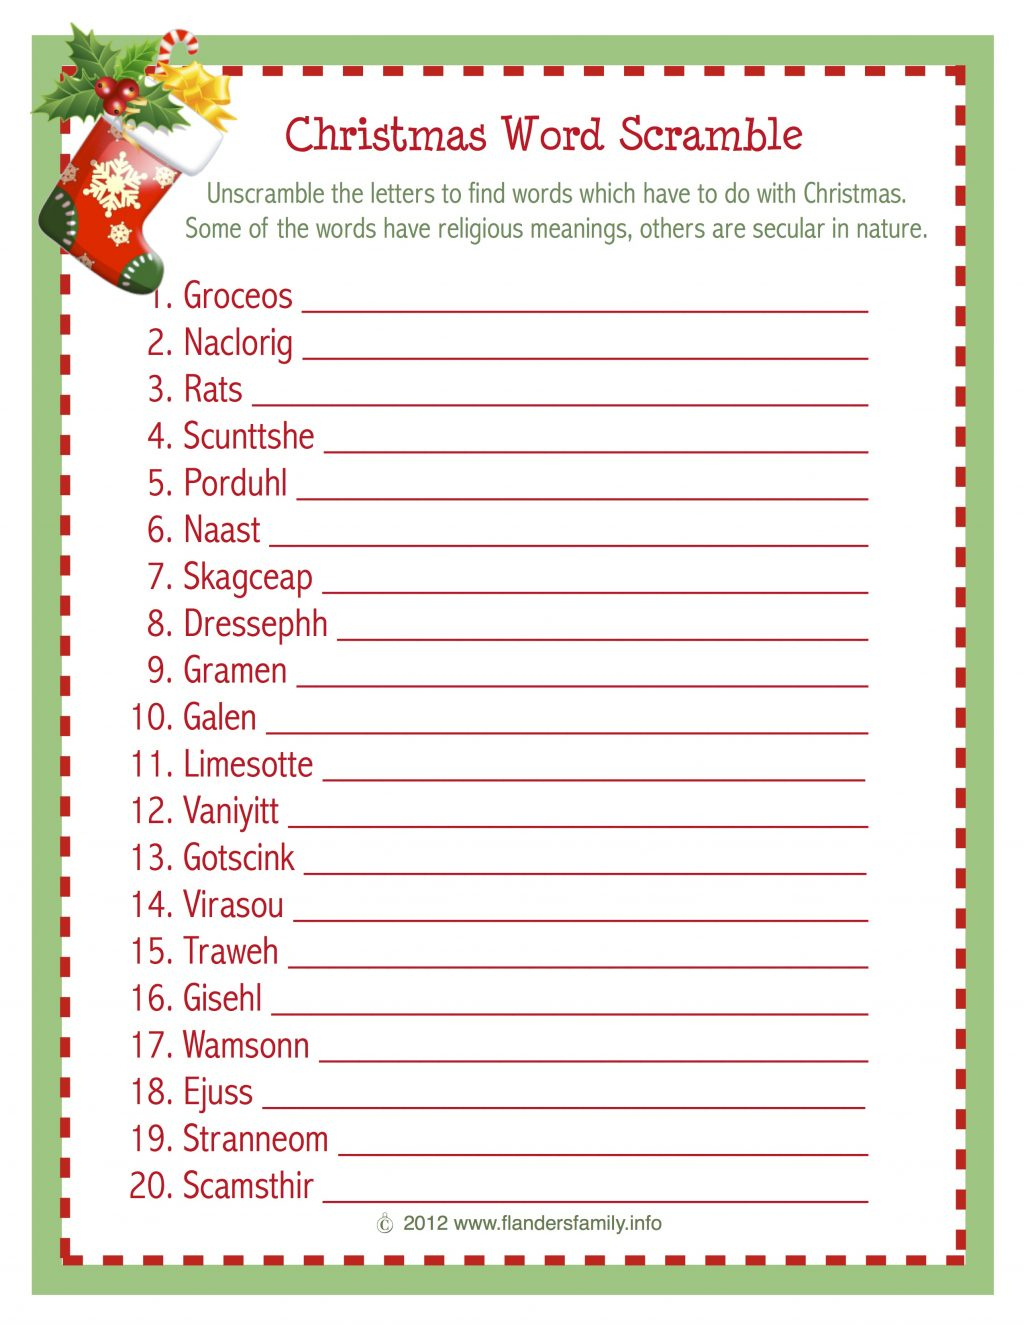 Christmas Word Scramble (Free Printable) - Flanders Family Homelife - Free Printable Catholic Word Search